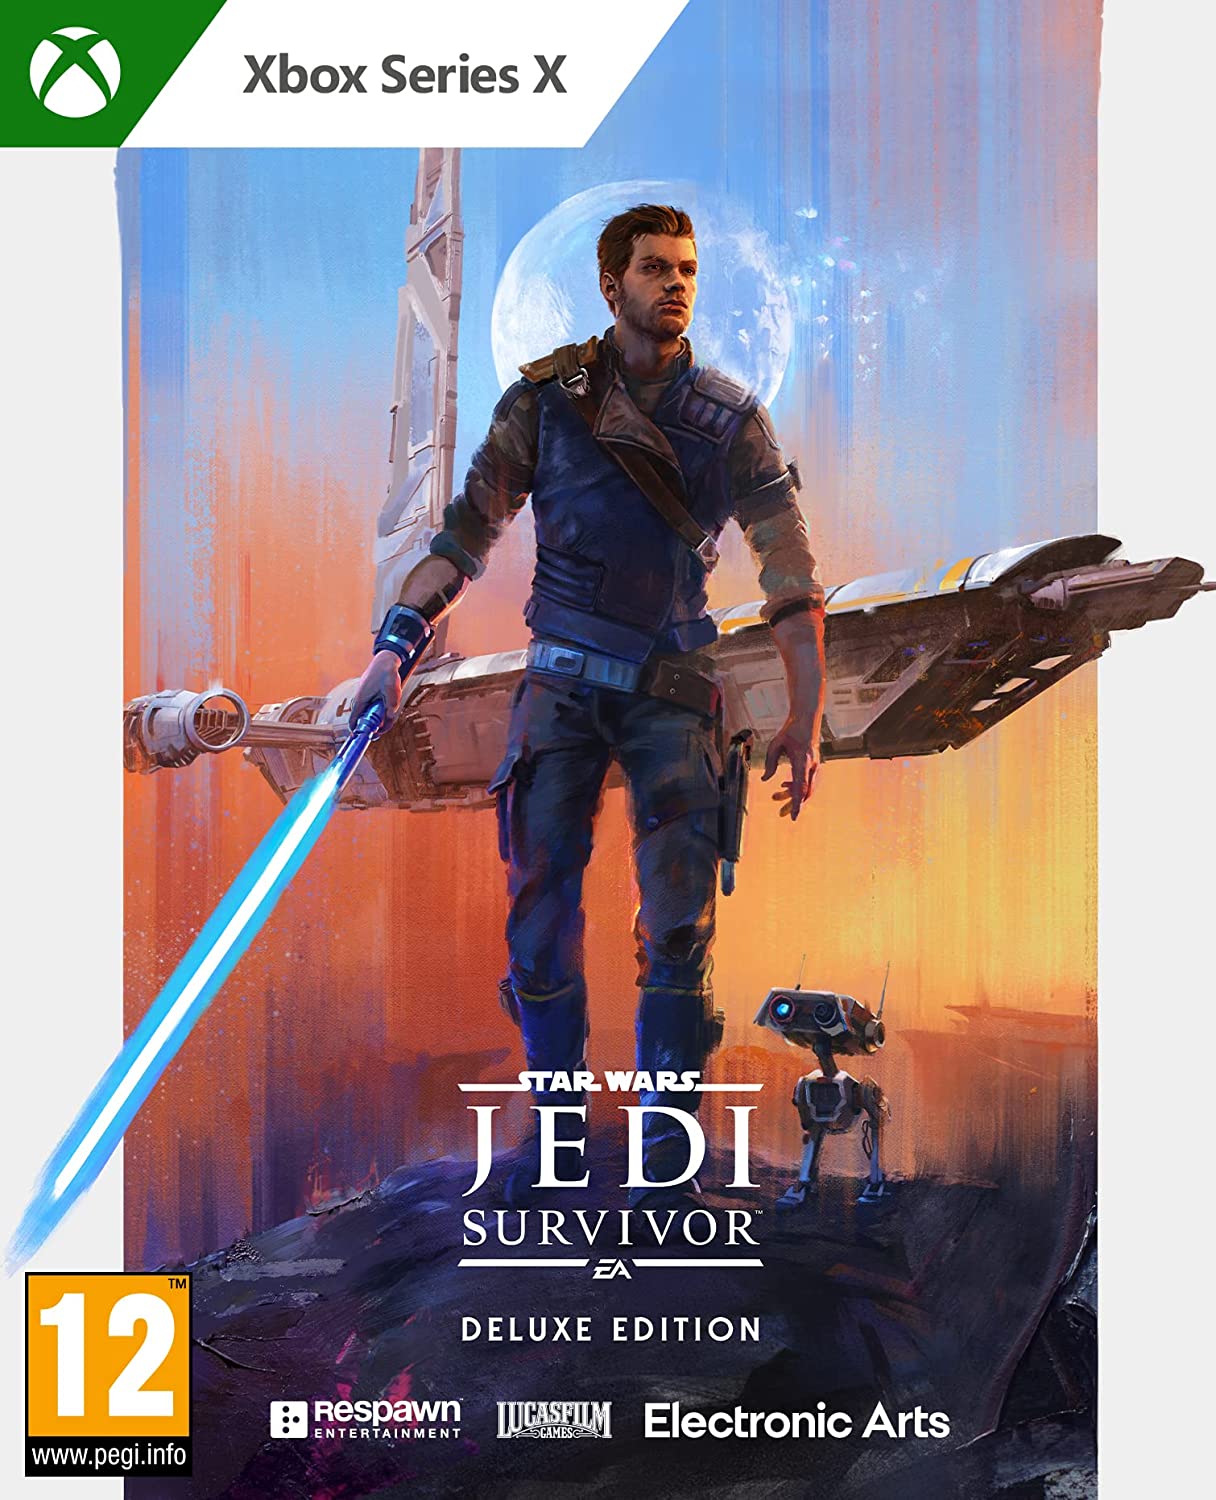 Star Wars Jedi Survivor (Deluxe Edition) – Xbox Series X